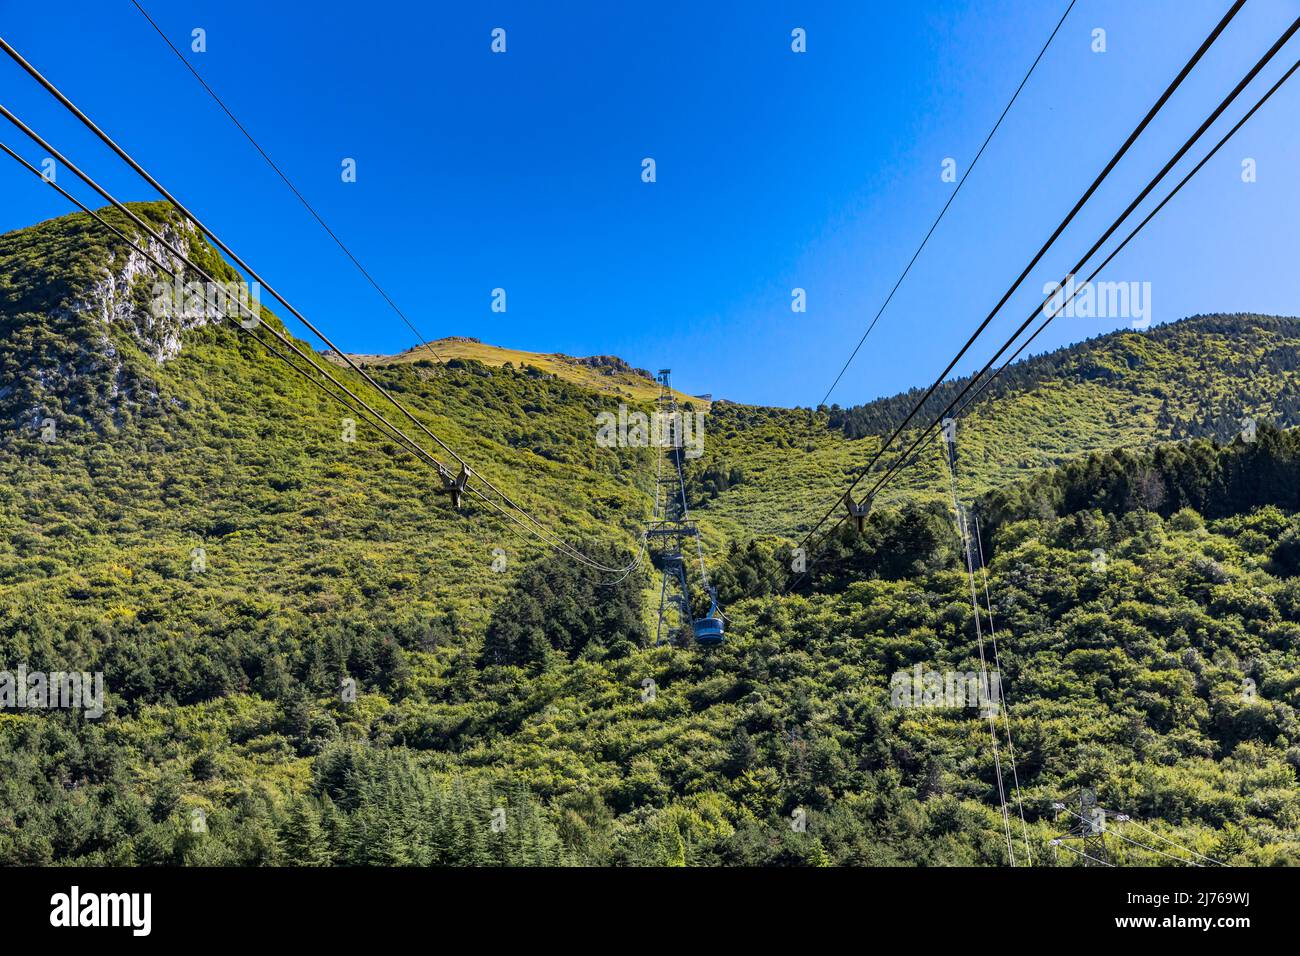 Cable car from Malcesine to Monte Baldo, Malcesine, Lake Garda, Italy, Europe Stock Photo